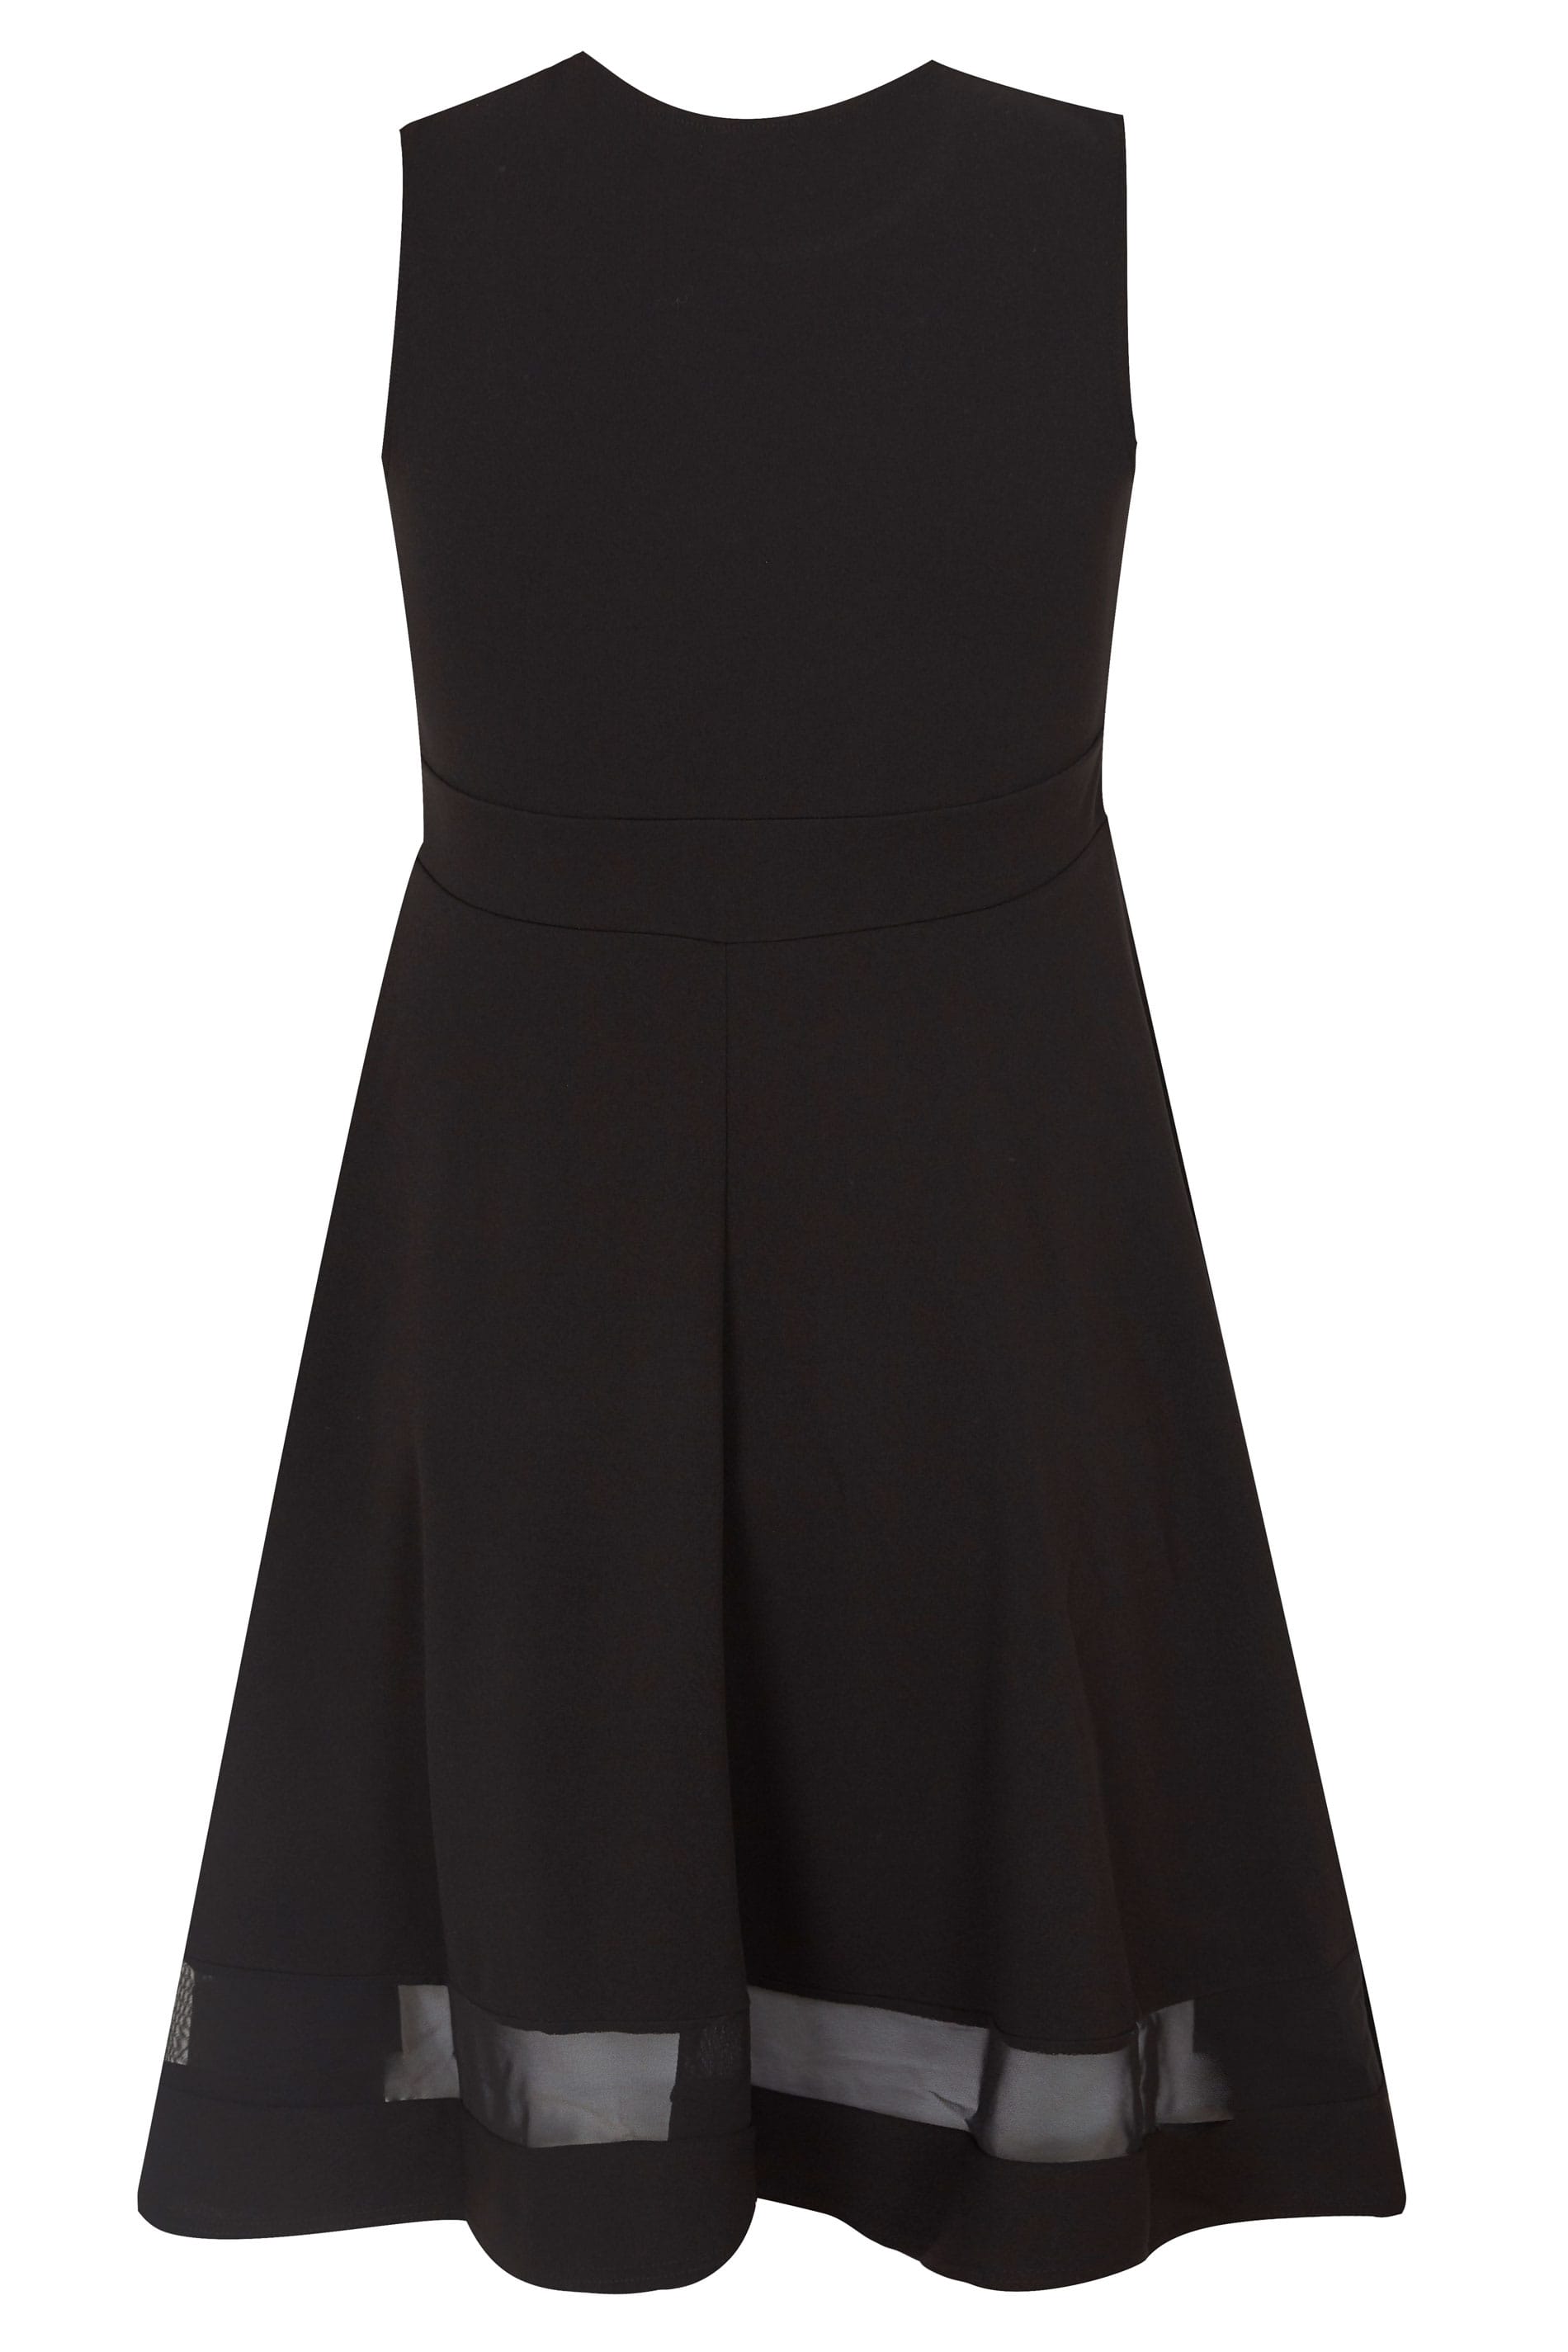 Black Scuba Skater Dress, Plus size 16 to 36 | Yours Clothing